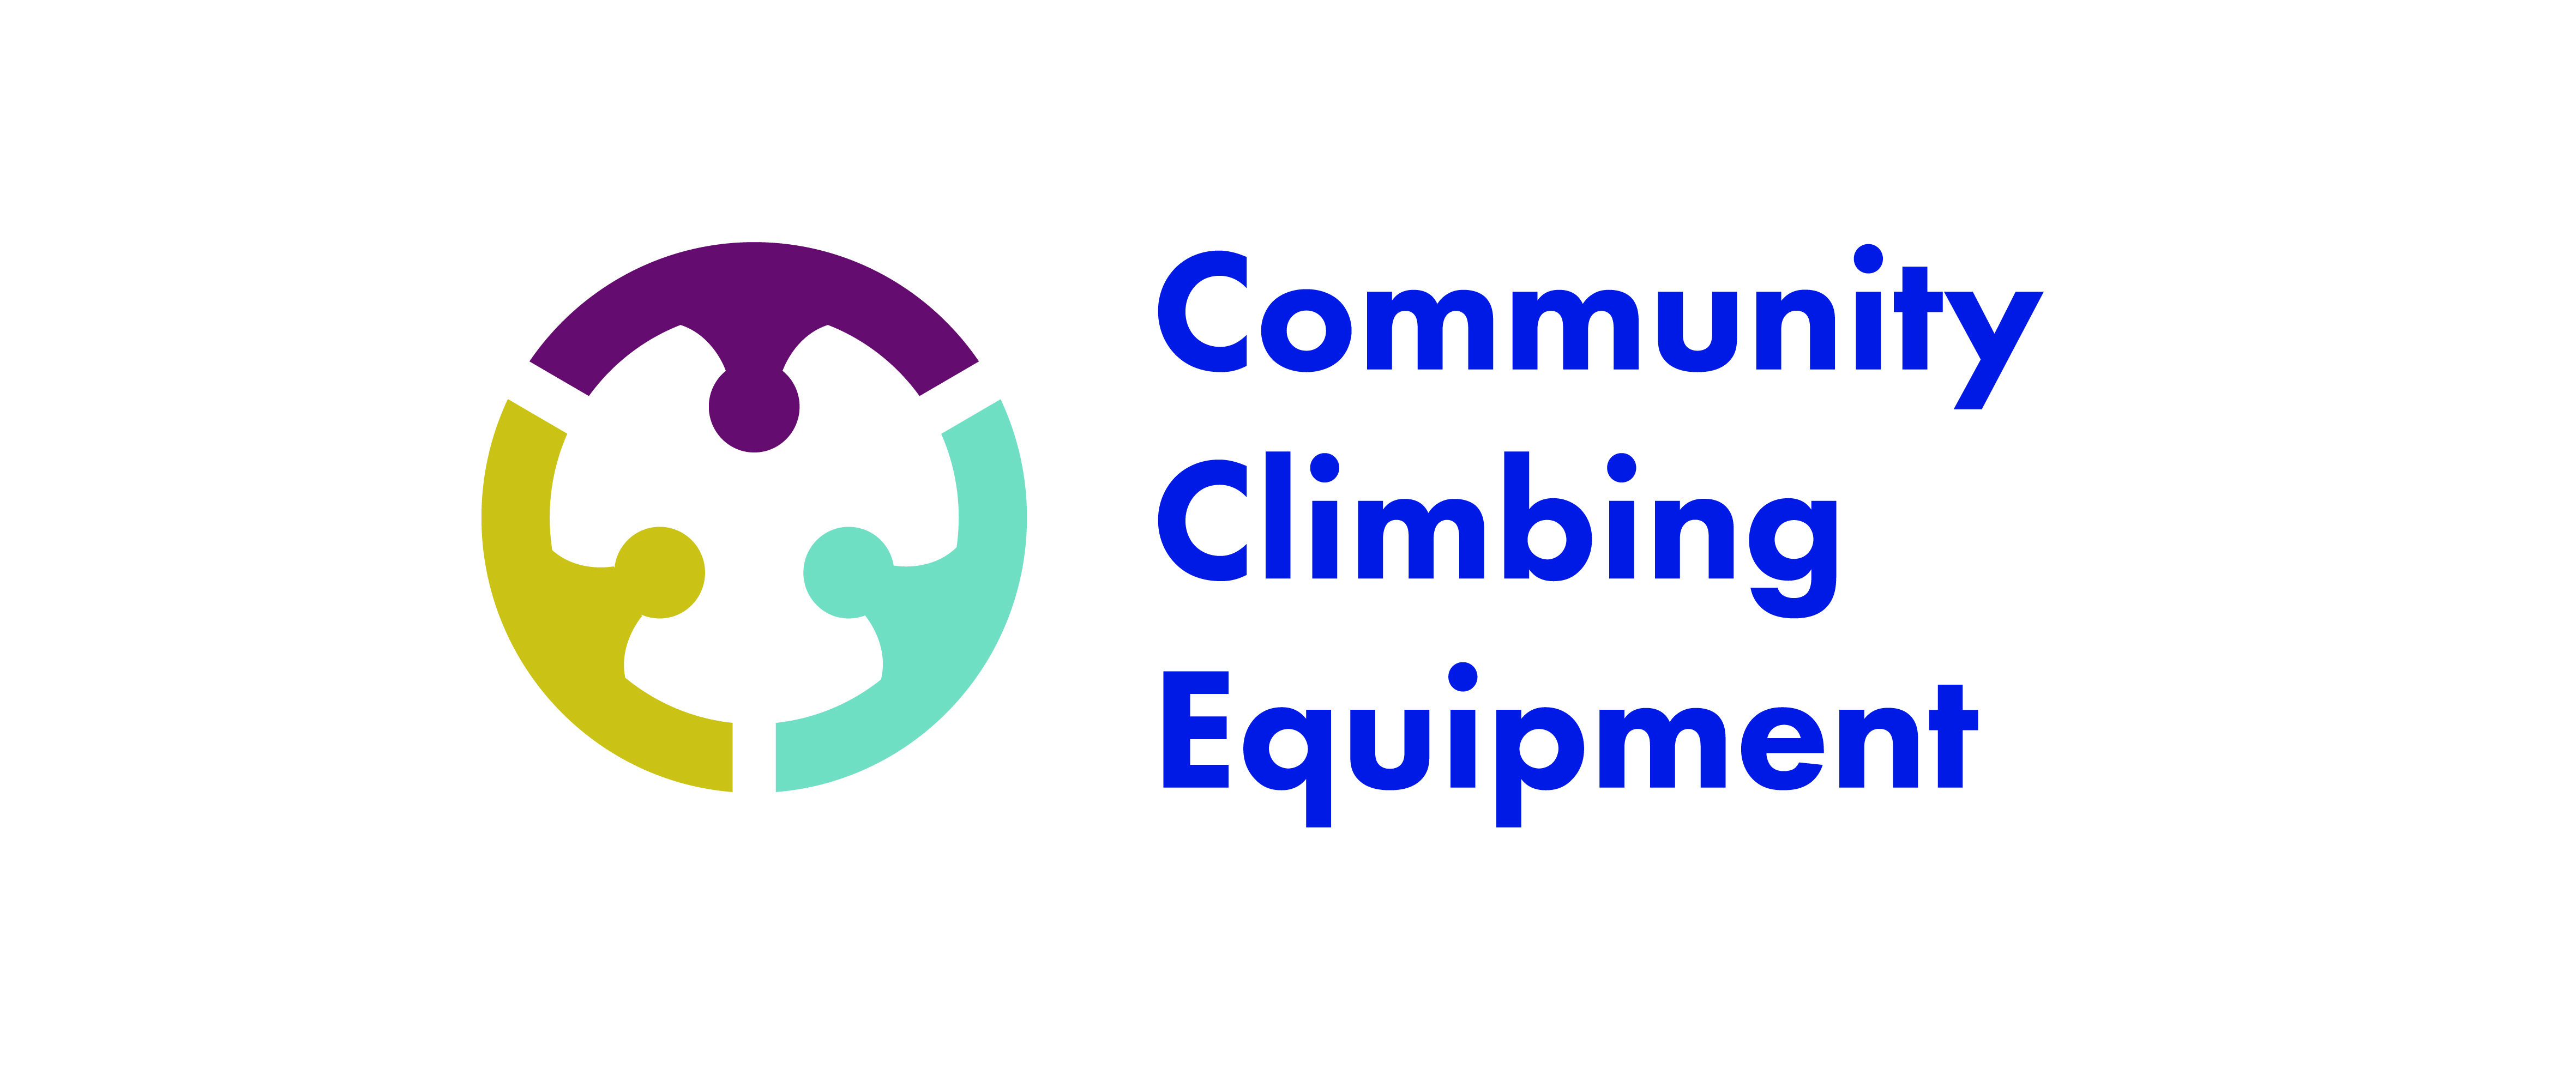  Community Climbing Equipment